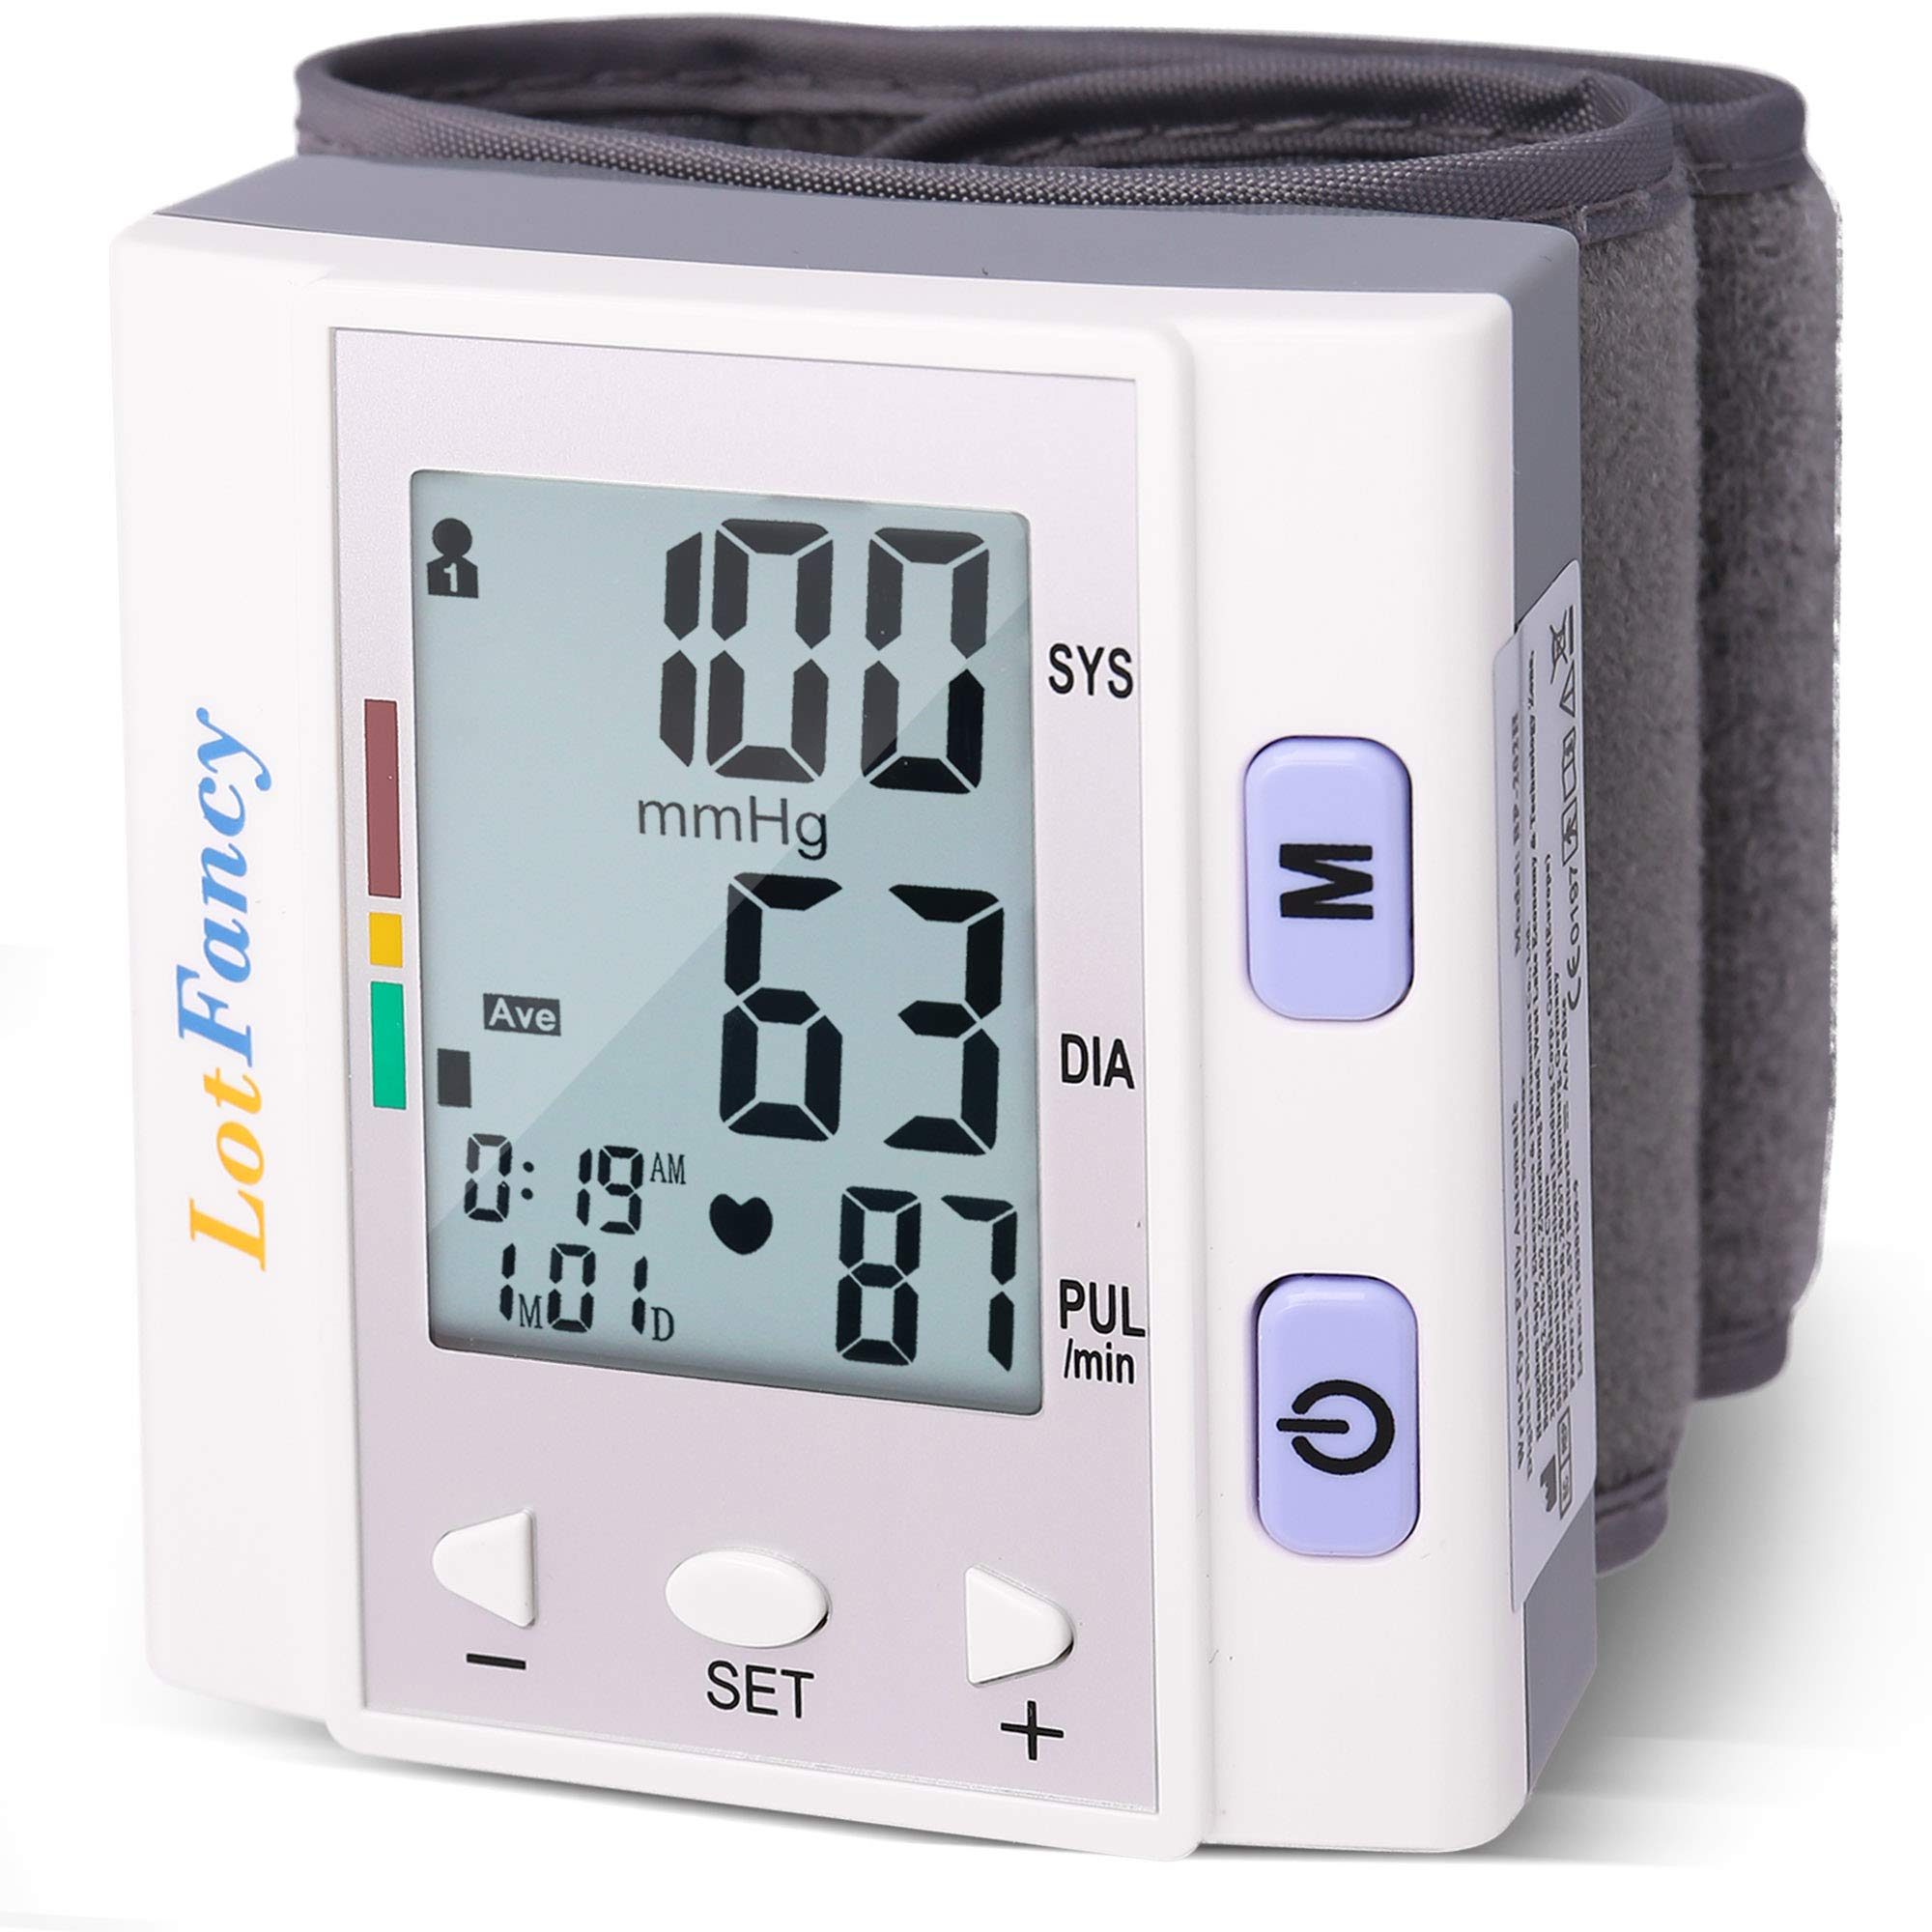  iHealth Push Wrist Blood Pressure Monitor, Digital